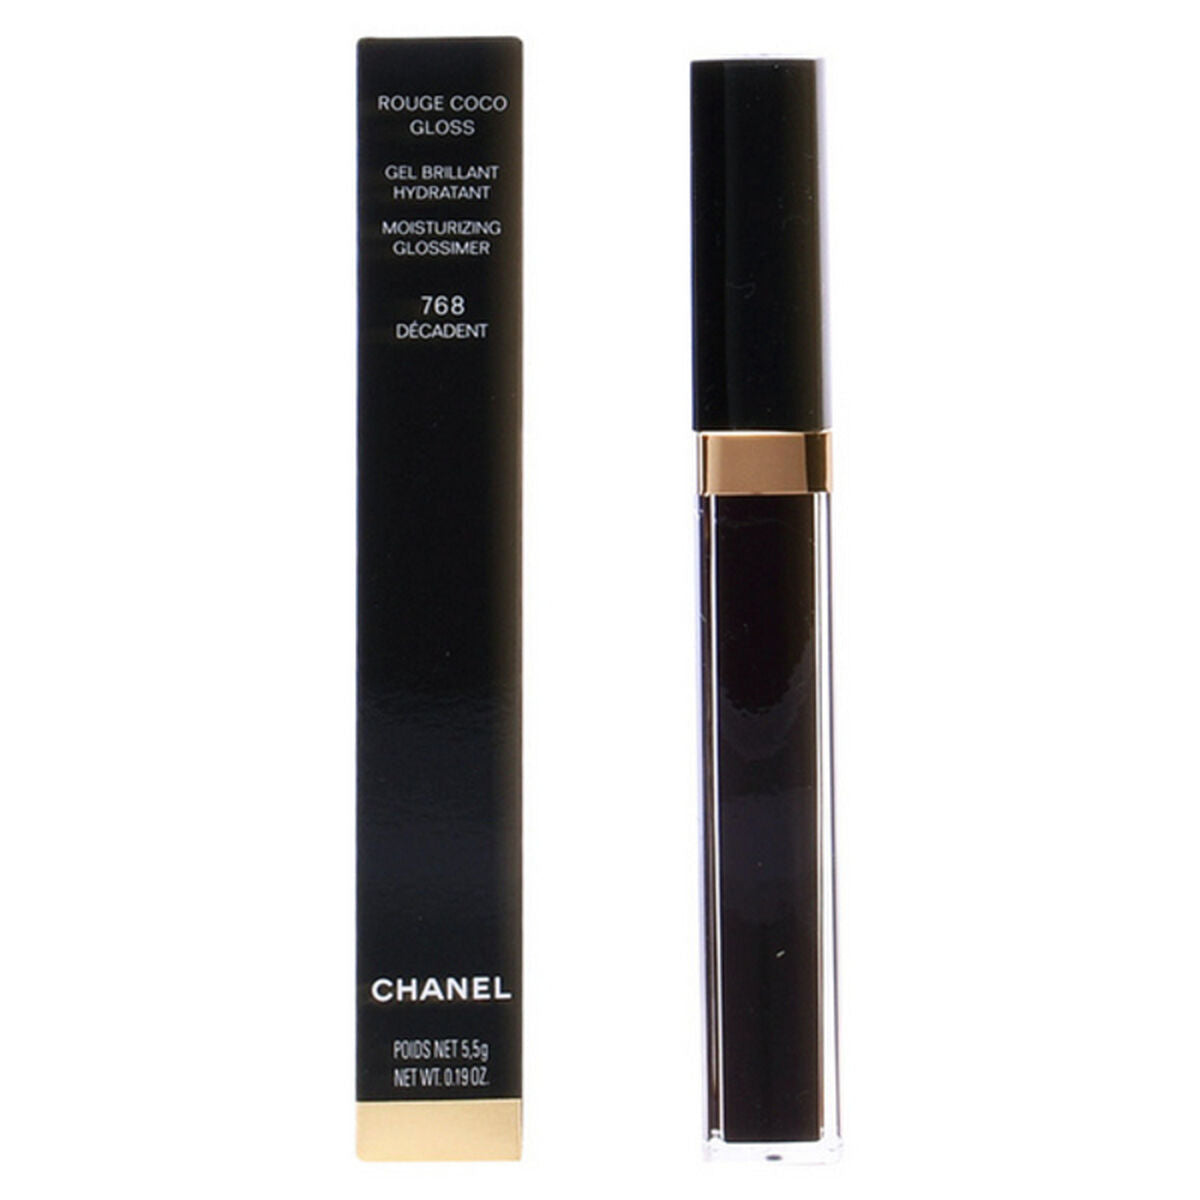 Gloss à lèvres Rouge Coco Chanel